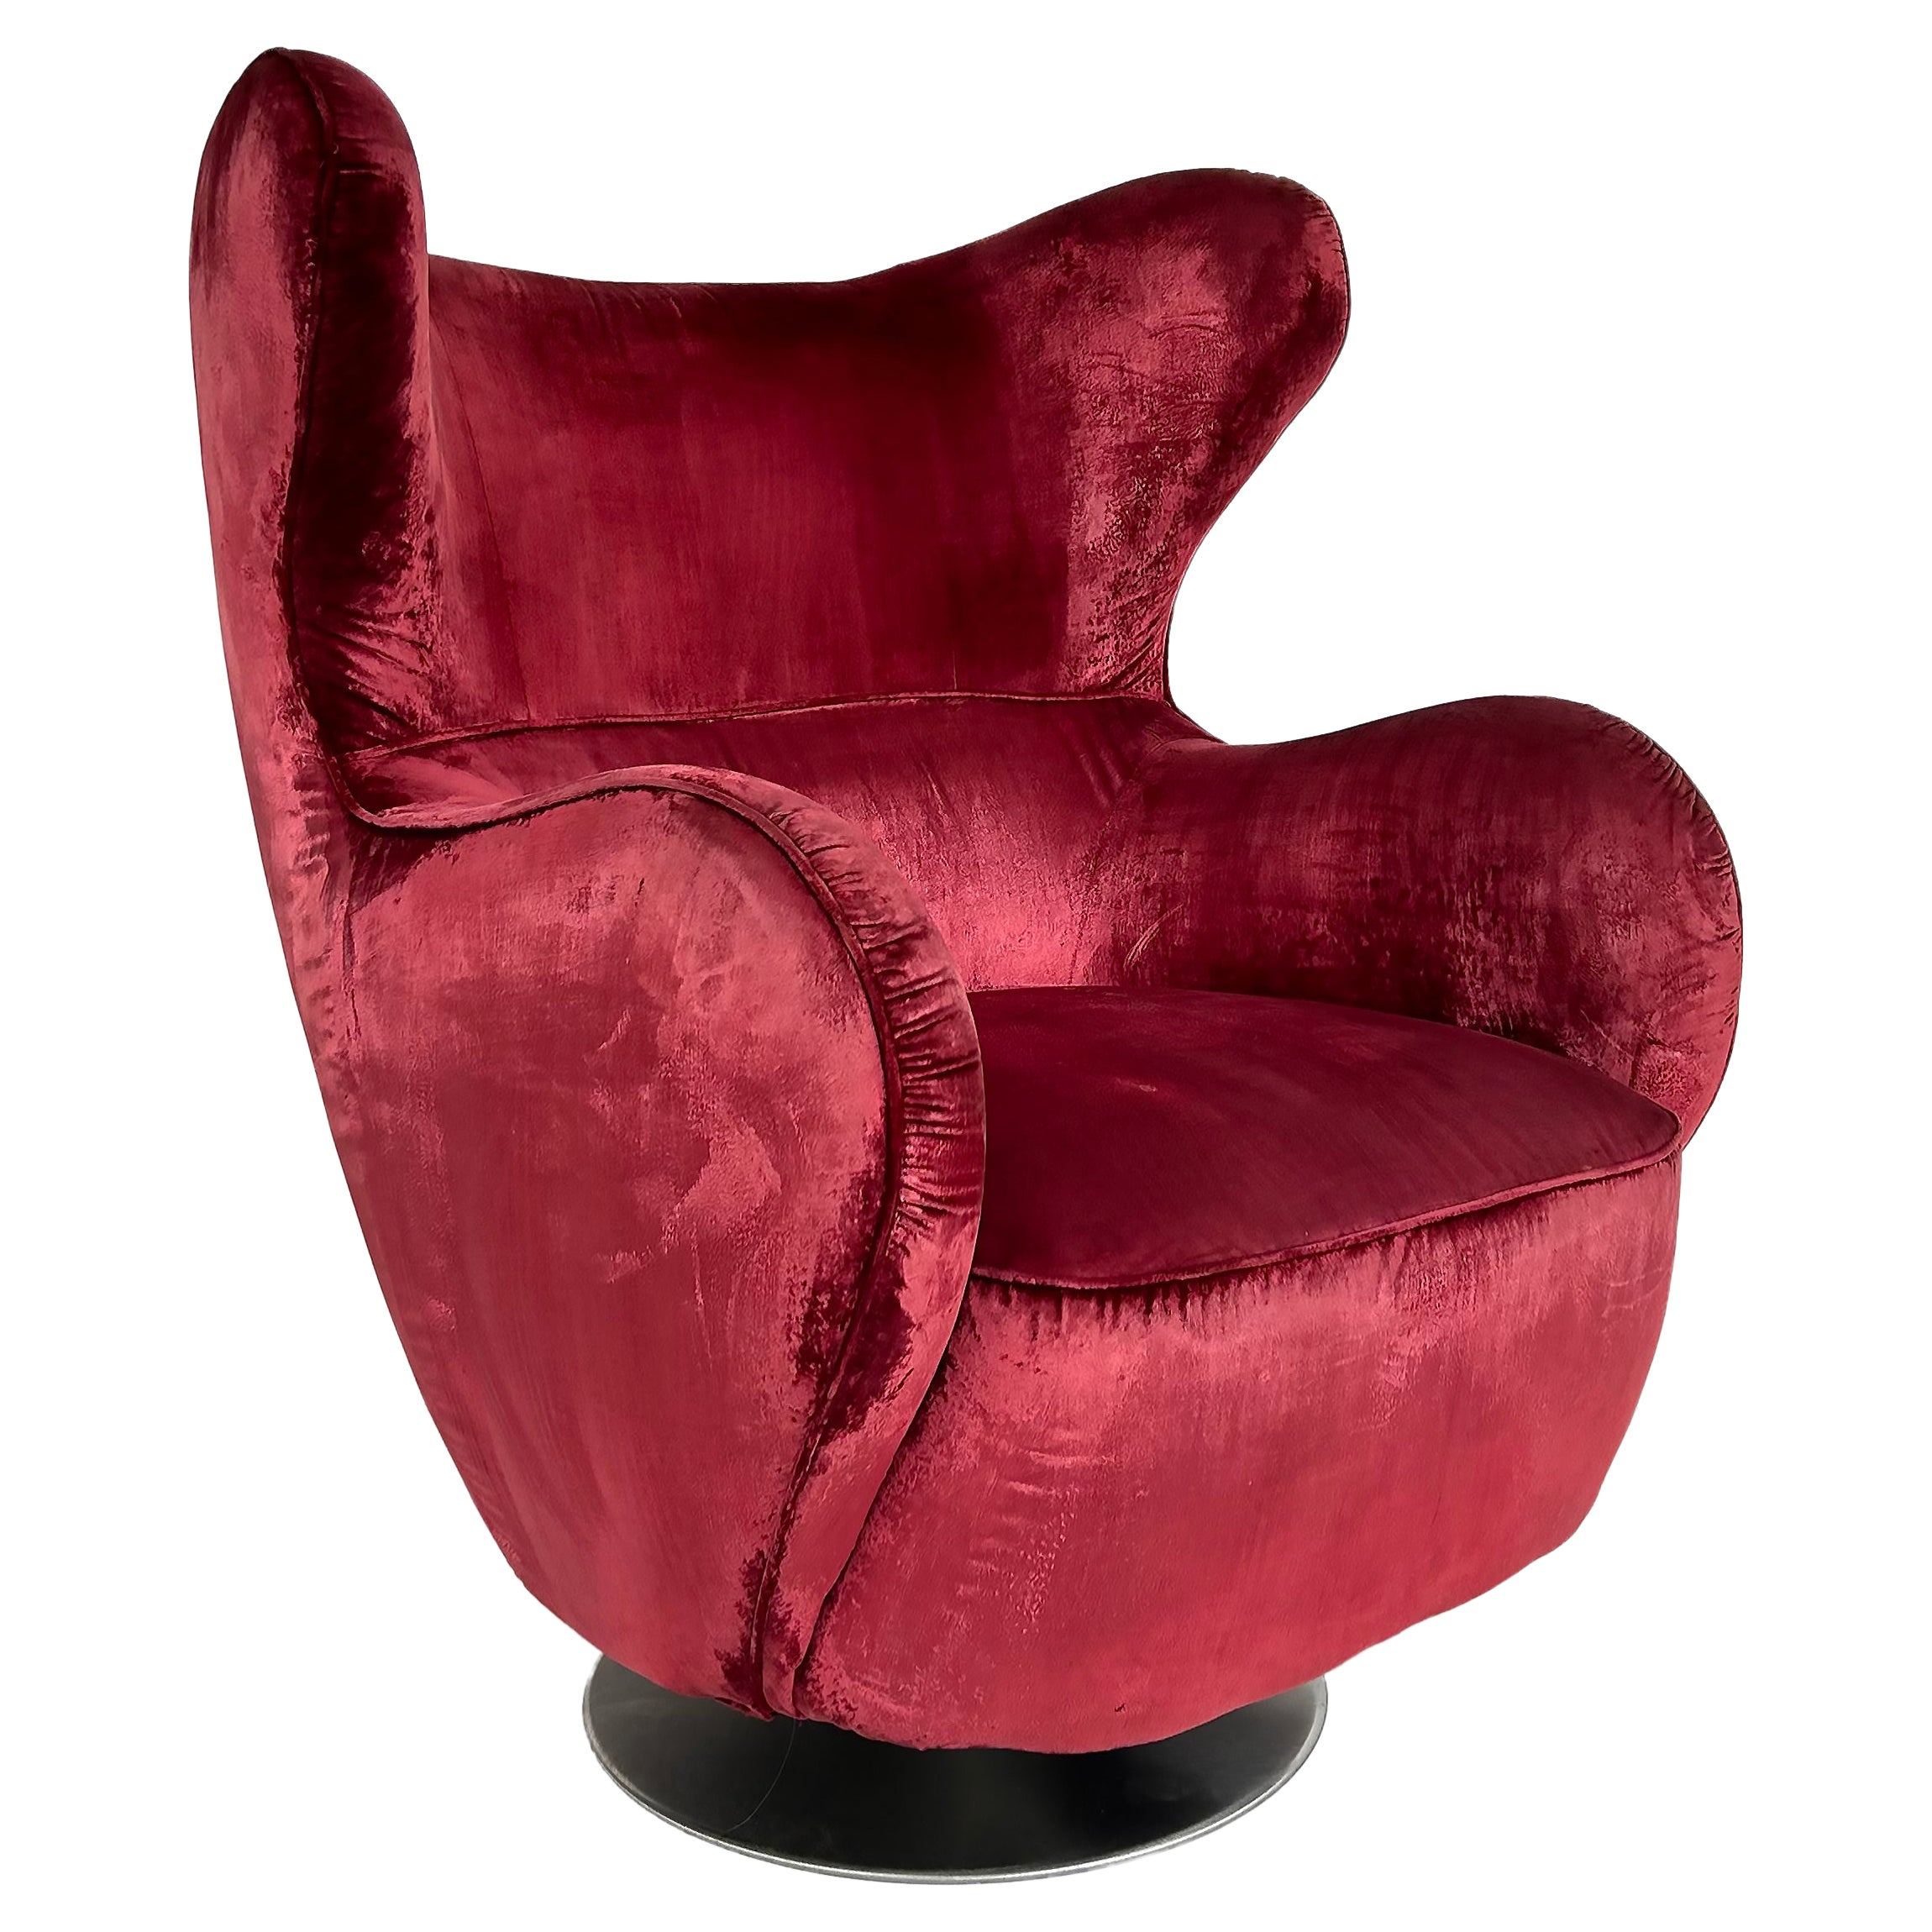 Vladimir Kagan New York Collection Swivel Chair with Original Upholstery